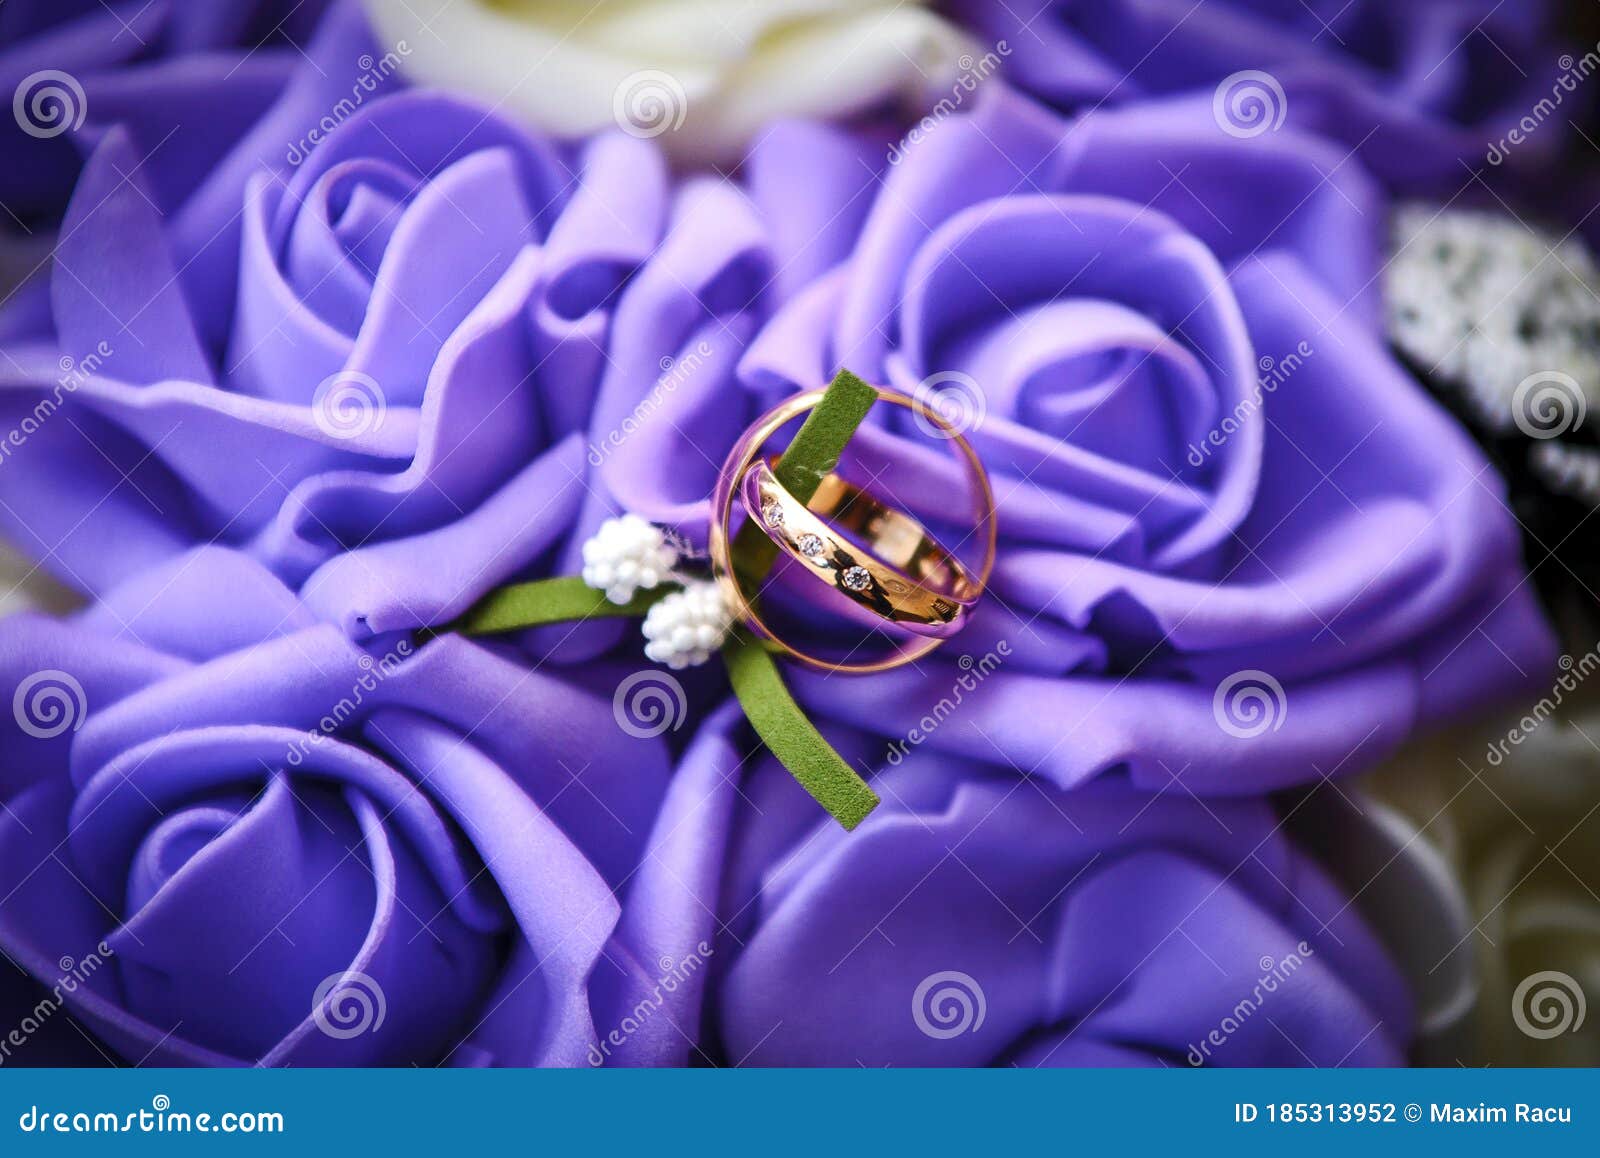 Beautiful Wedding Rings On The Wedding Day On A Purple